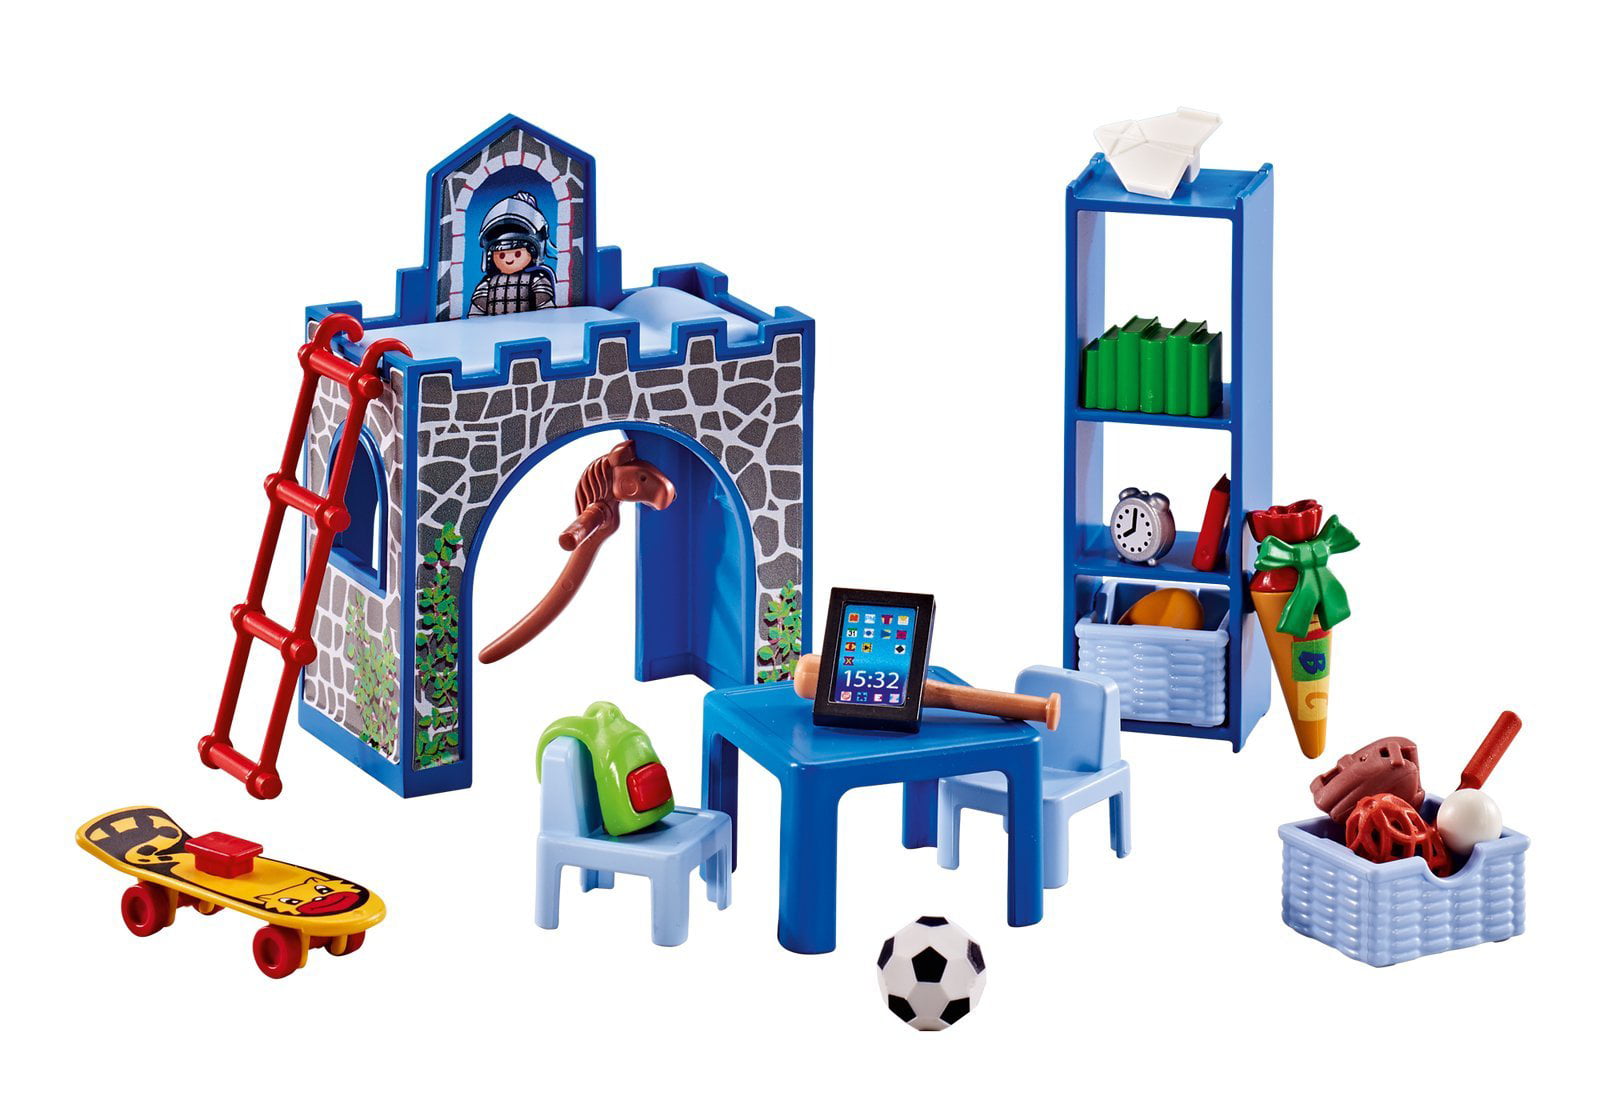 Playmobil Add On 6556 Kid's Room